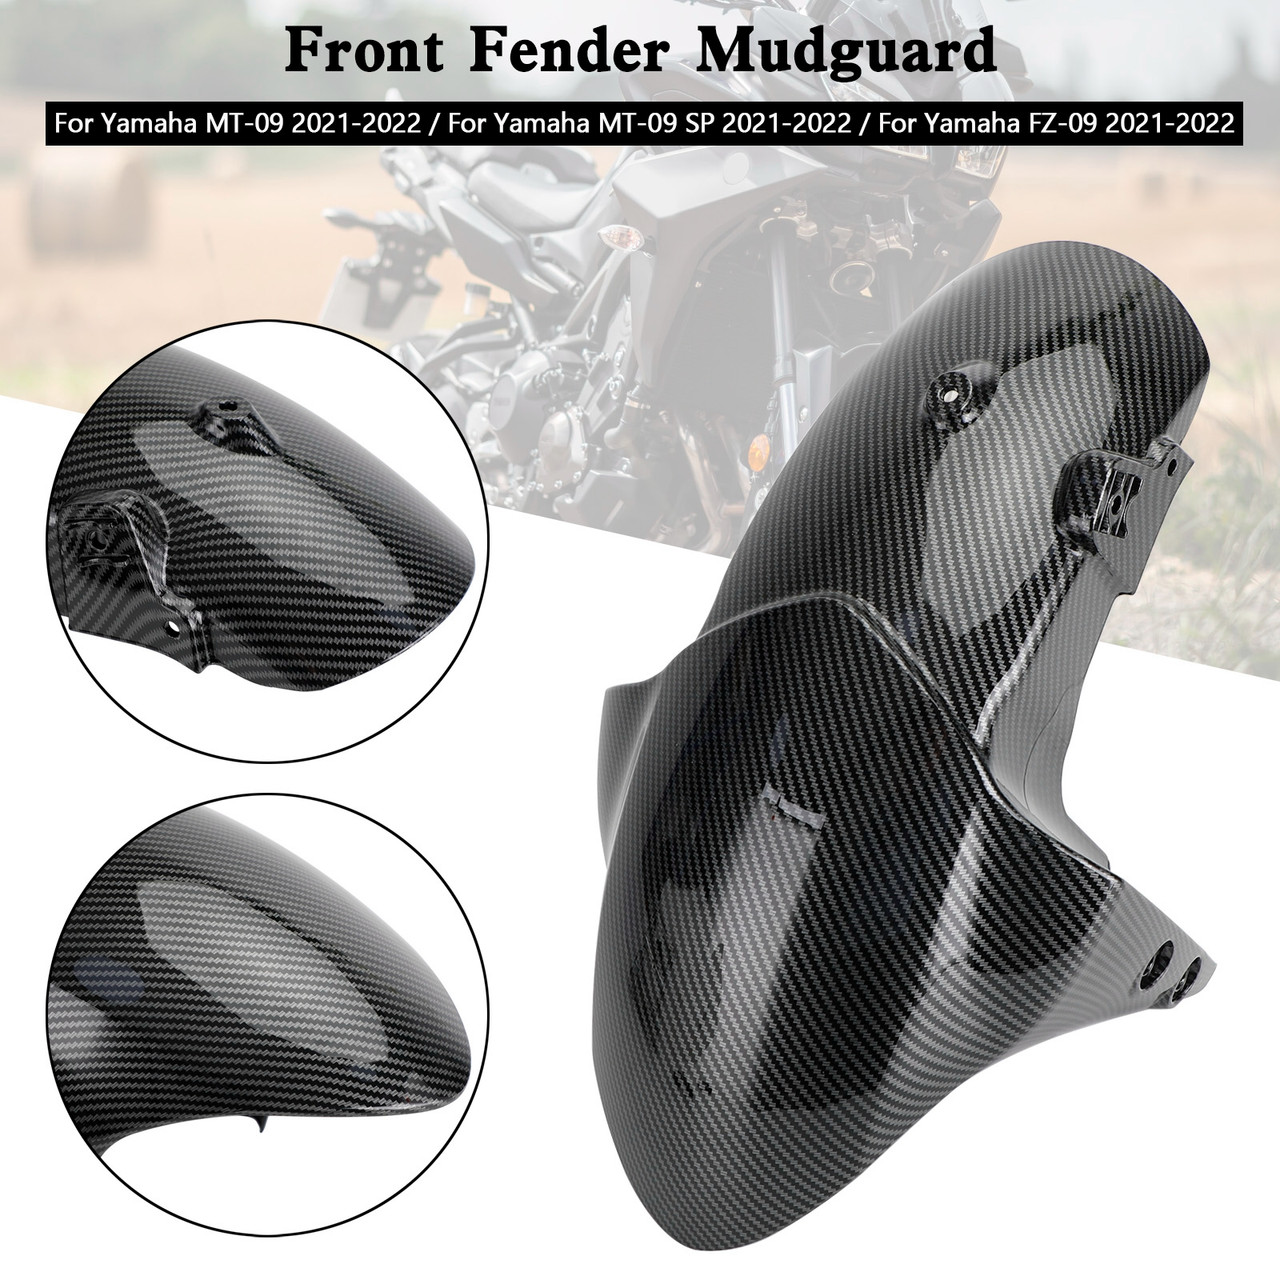 Front Fender Mudguard Fairing For Yamaha MT-09 FZ-09 MT09 SP 2021-2022 CBN